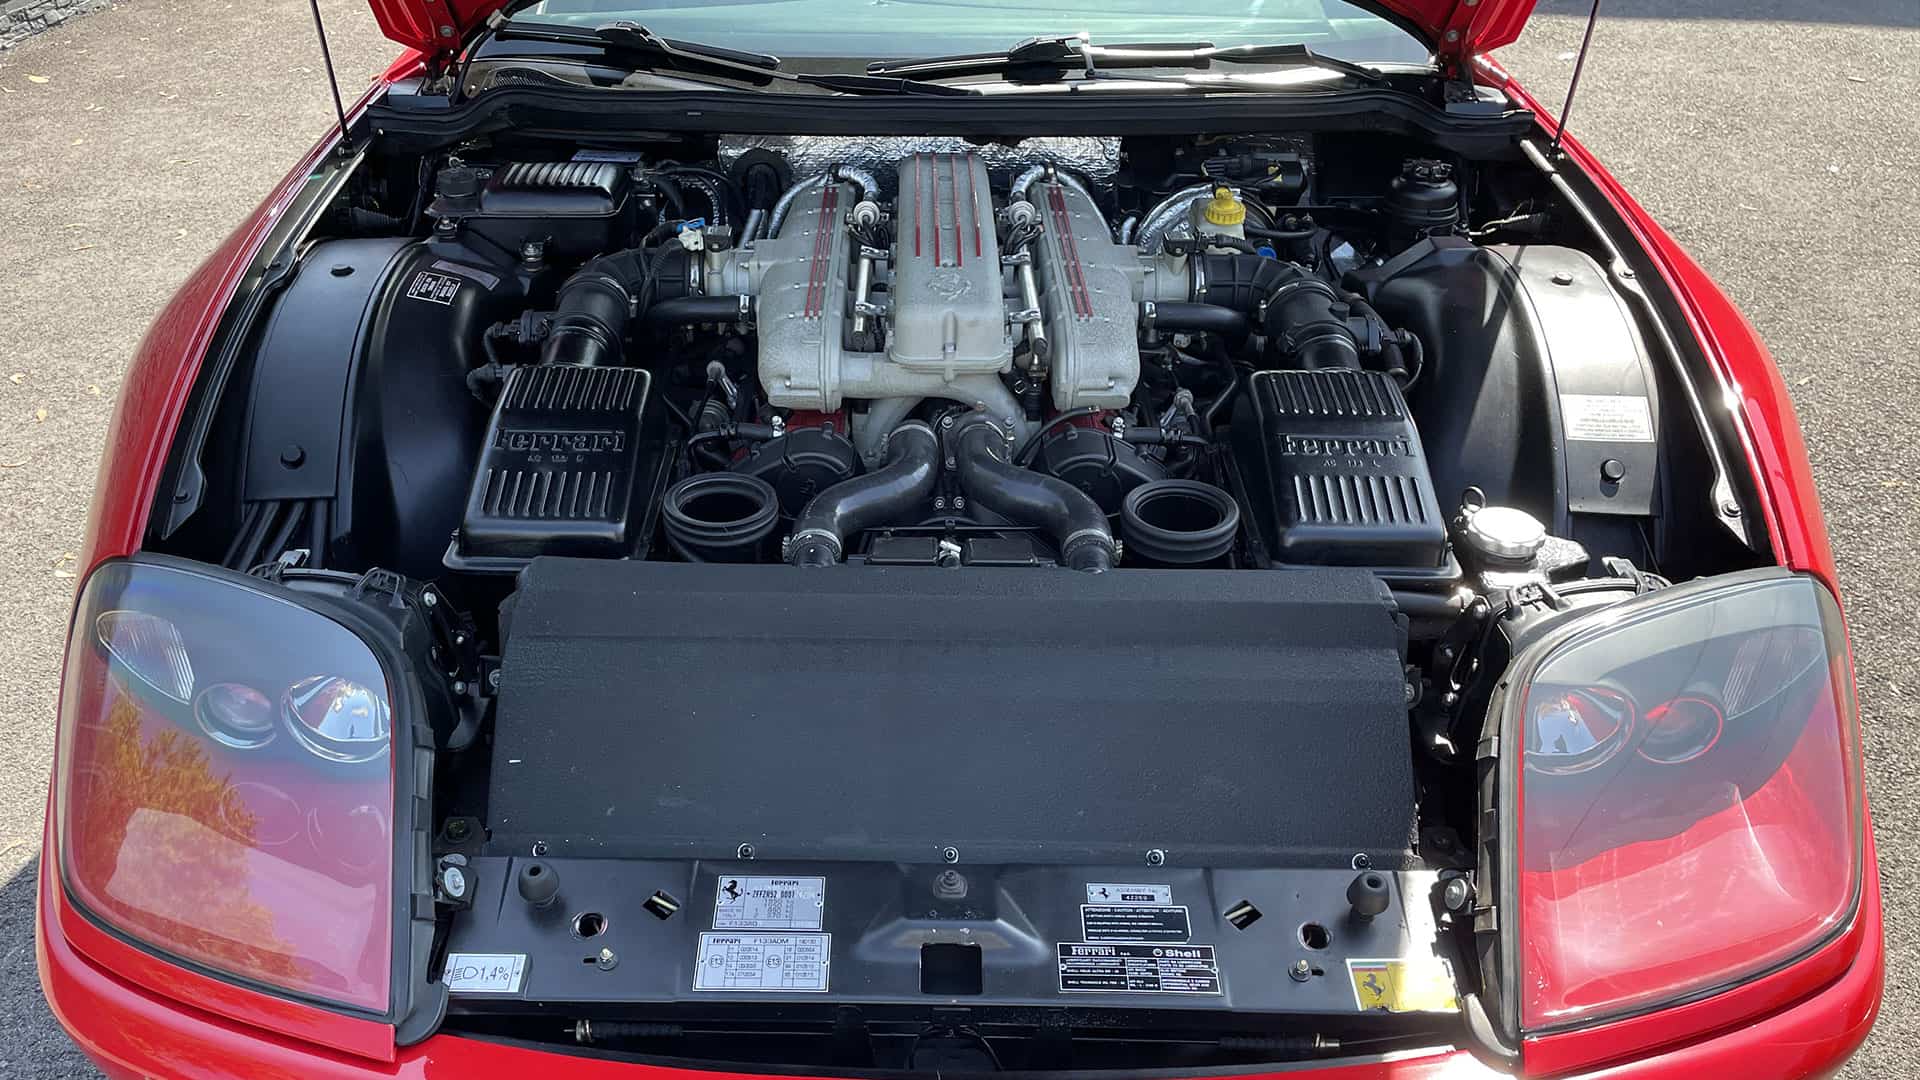 Engine view of the Ferrari 550 Barchetta